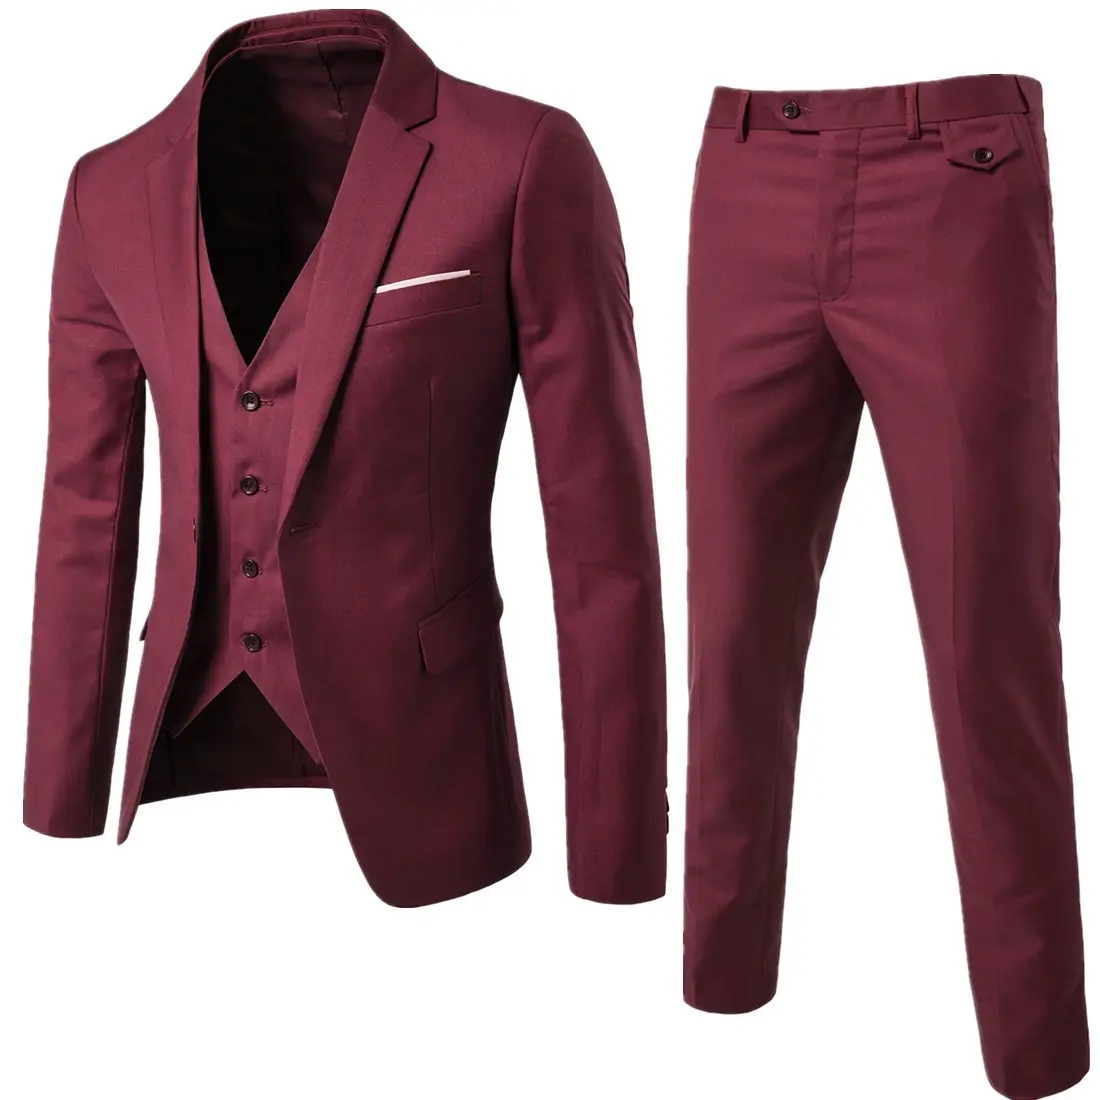 Men's Three-piece Suit Korean Slim Suit Business Fashion Clothing Best Man Groom Wedding Suit